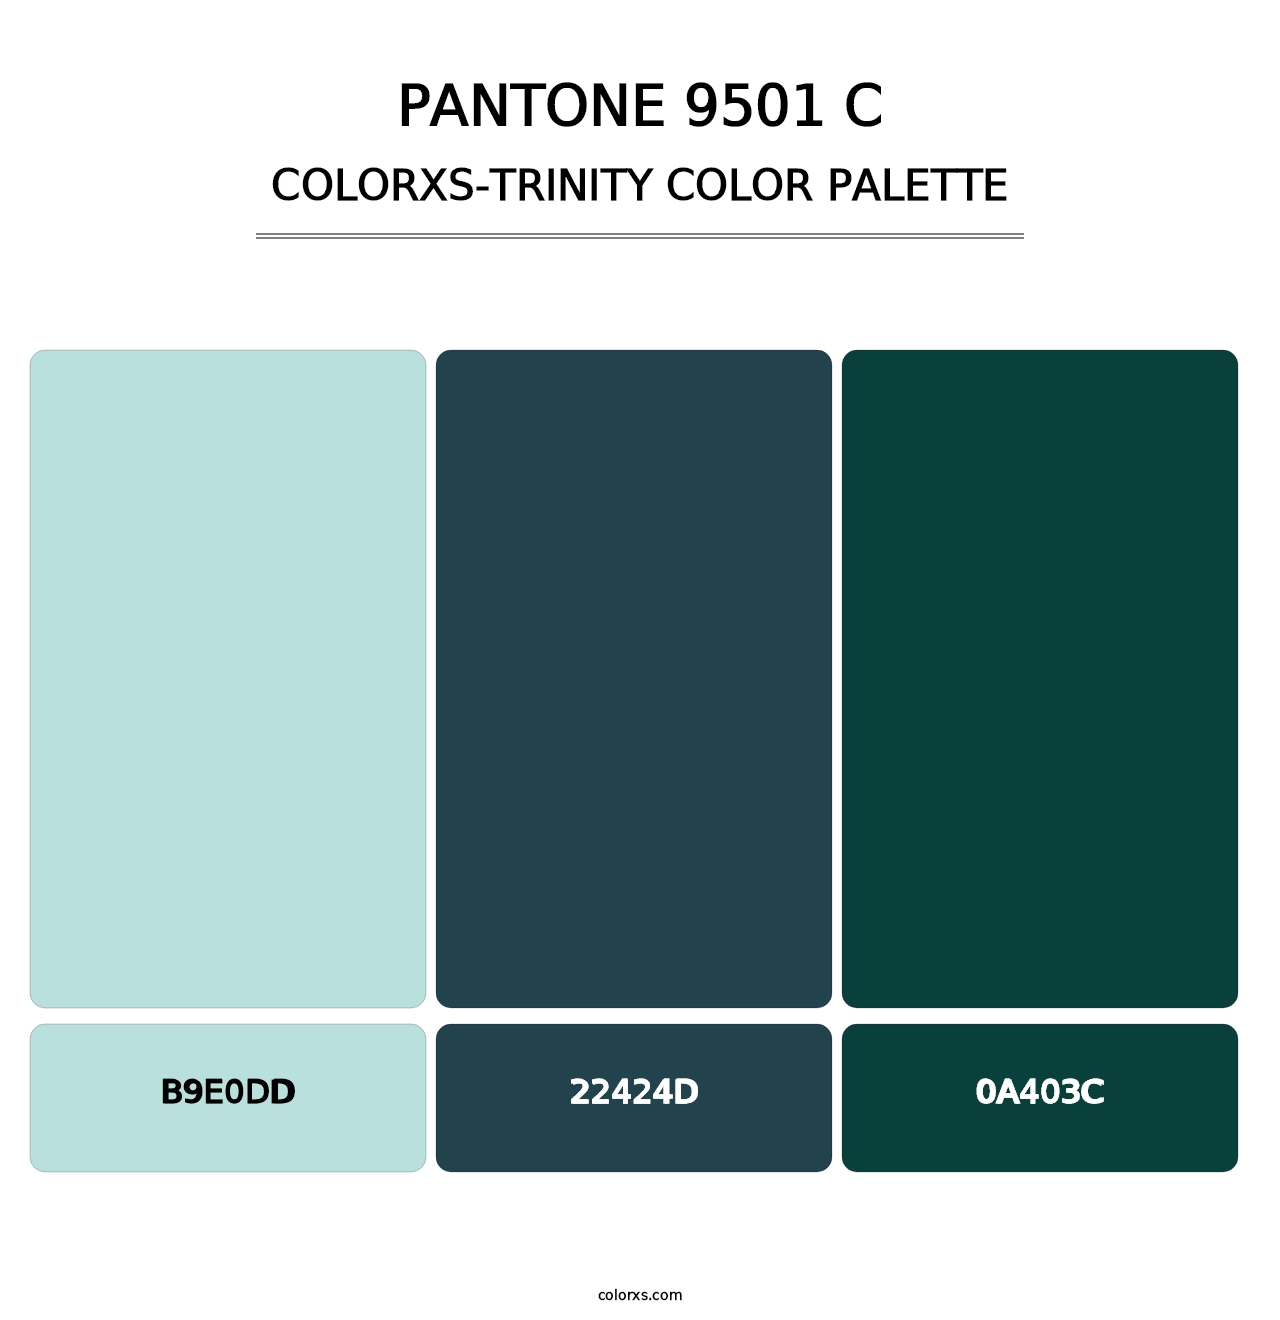 PANTONE 9501 C - Colorxs Trinity Palette